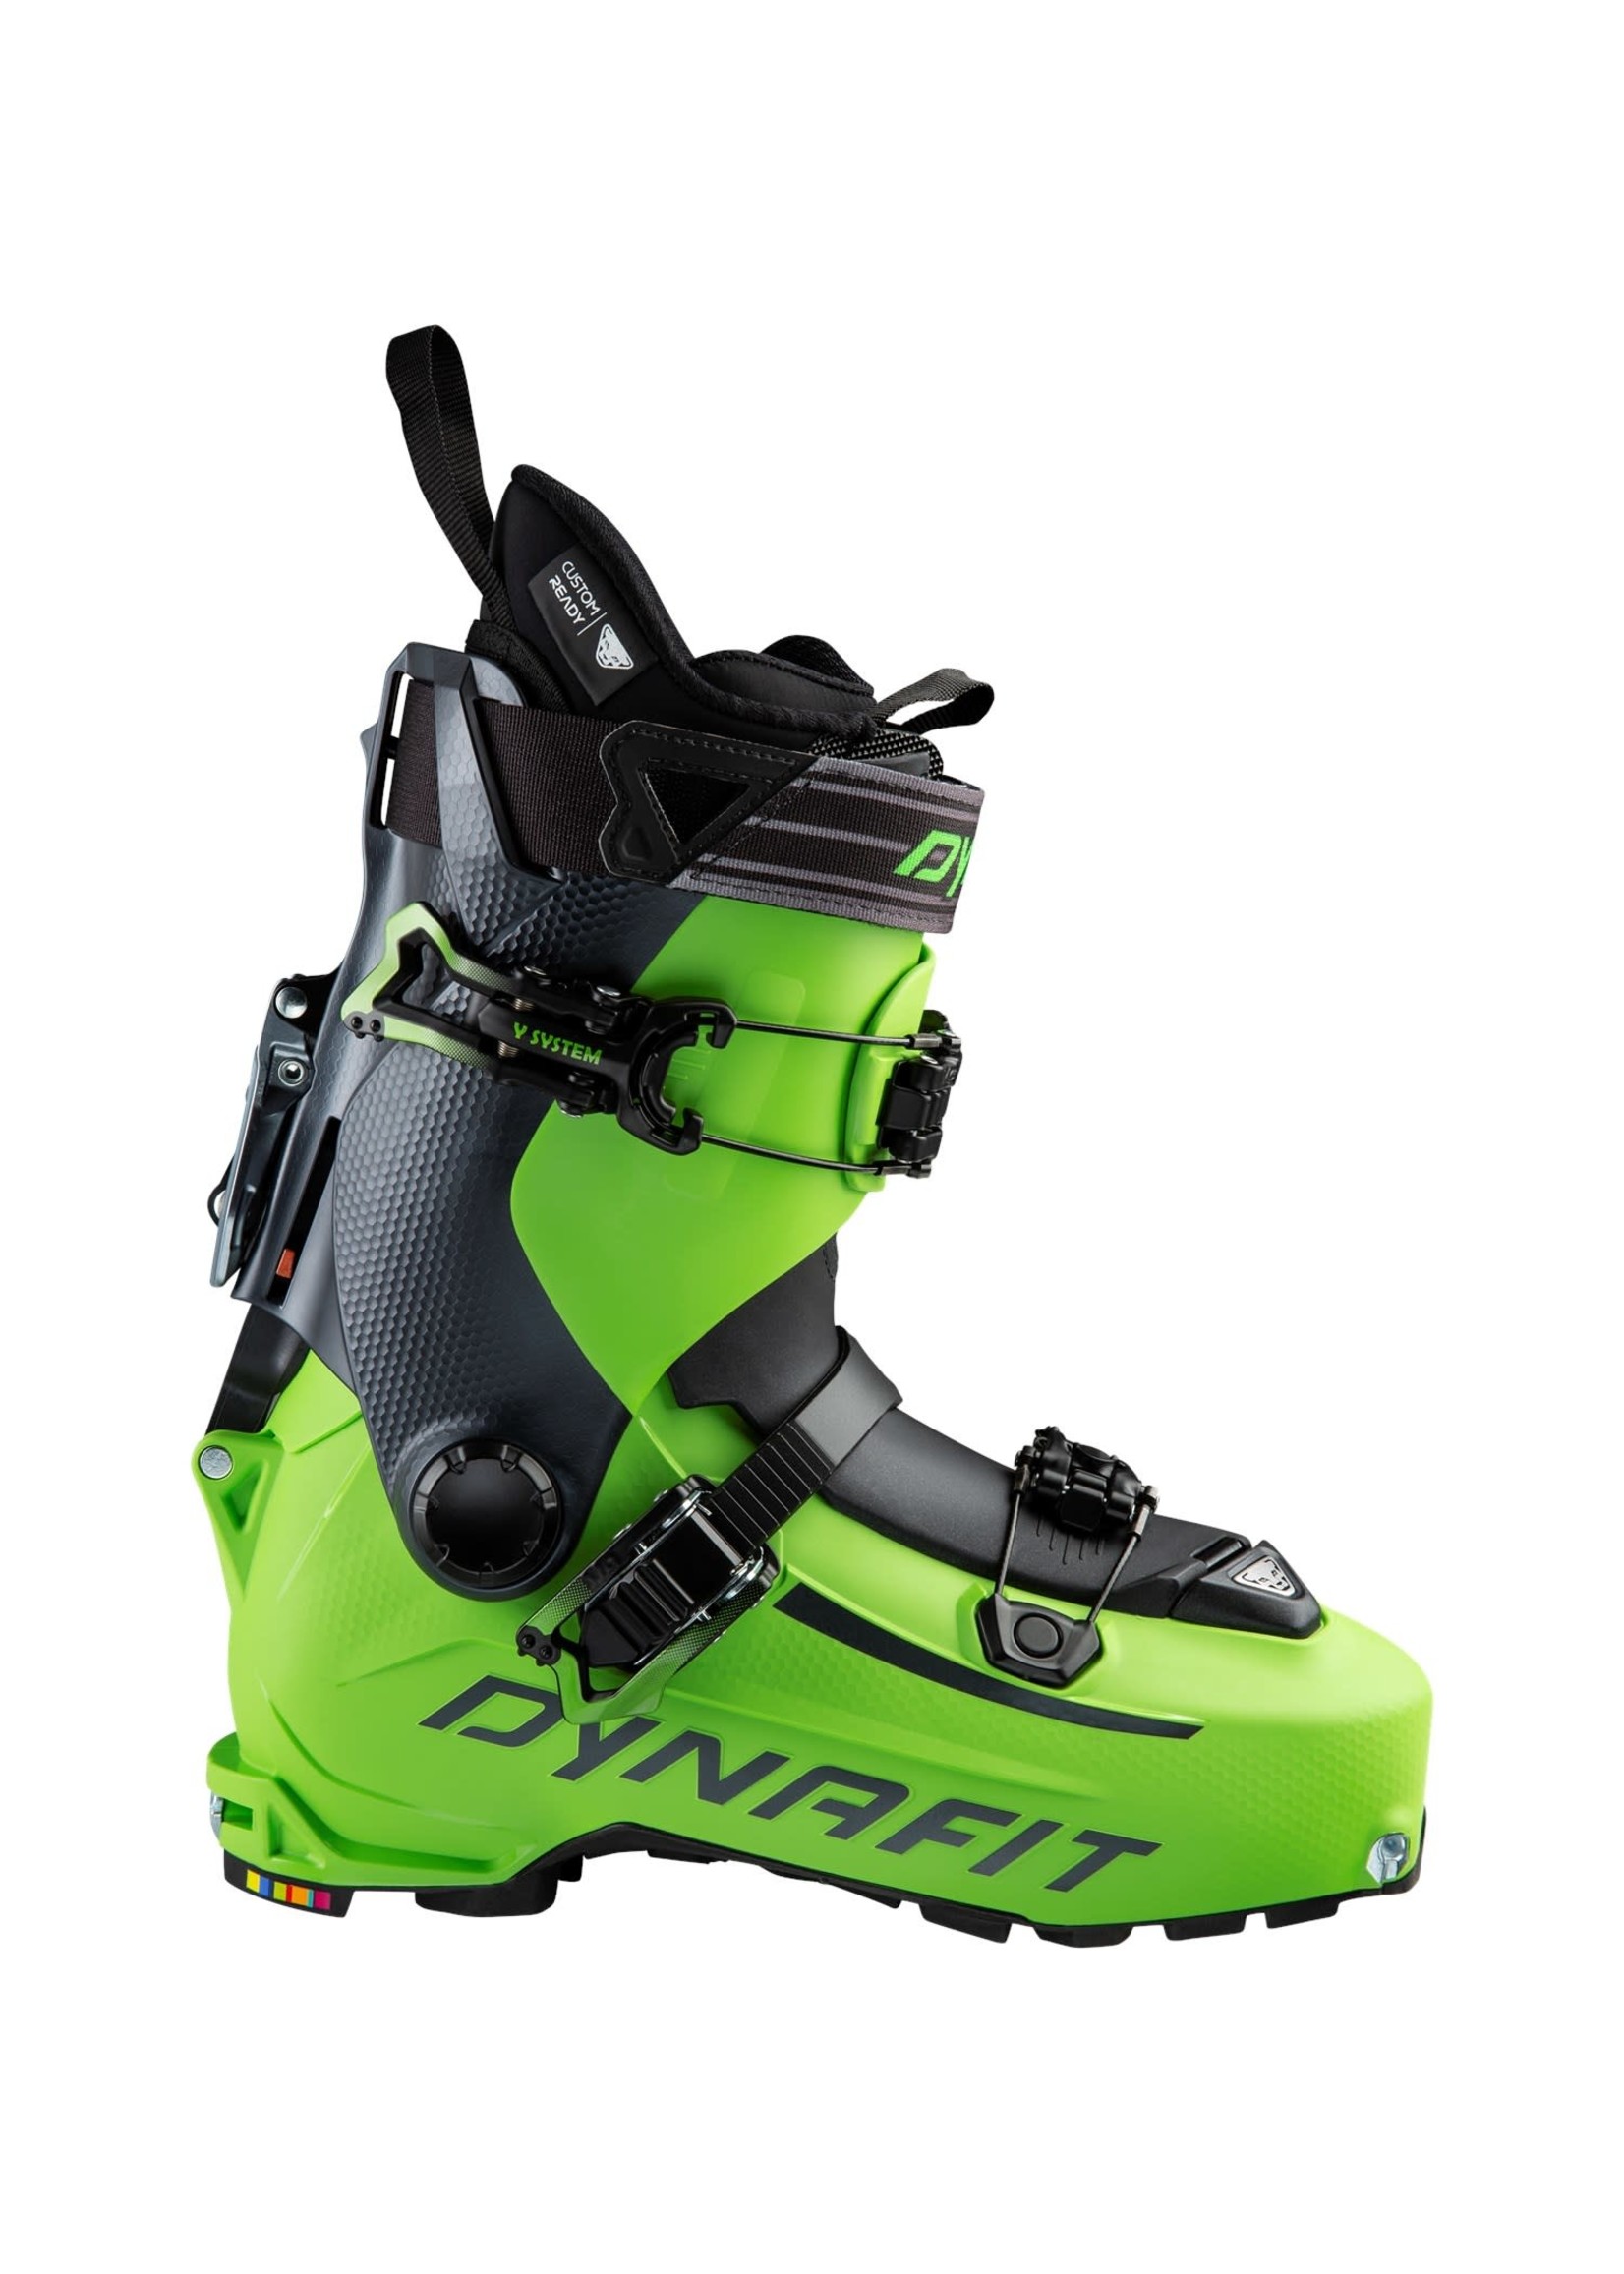 Dynafit Hoji PU AT Backcountry ski boots men 2020-21 – The Extra